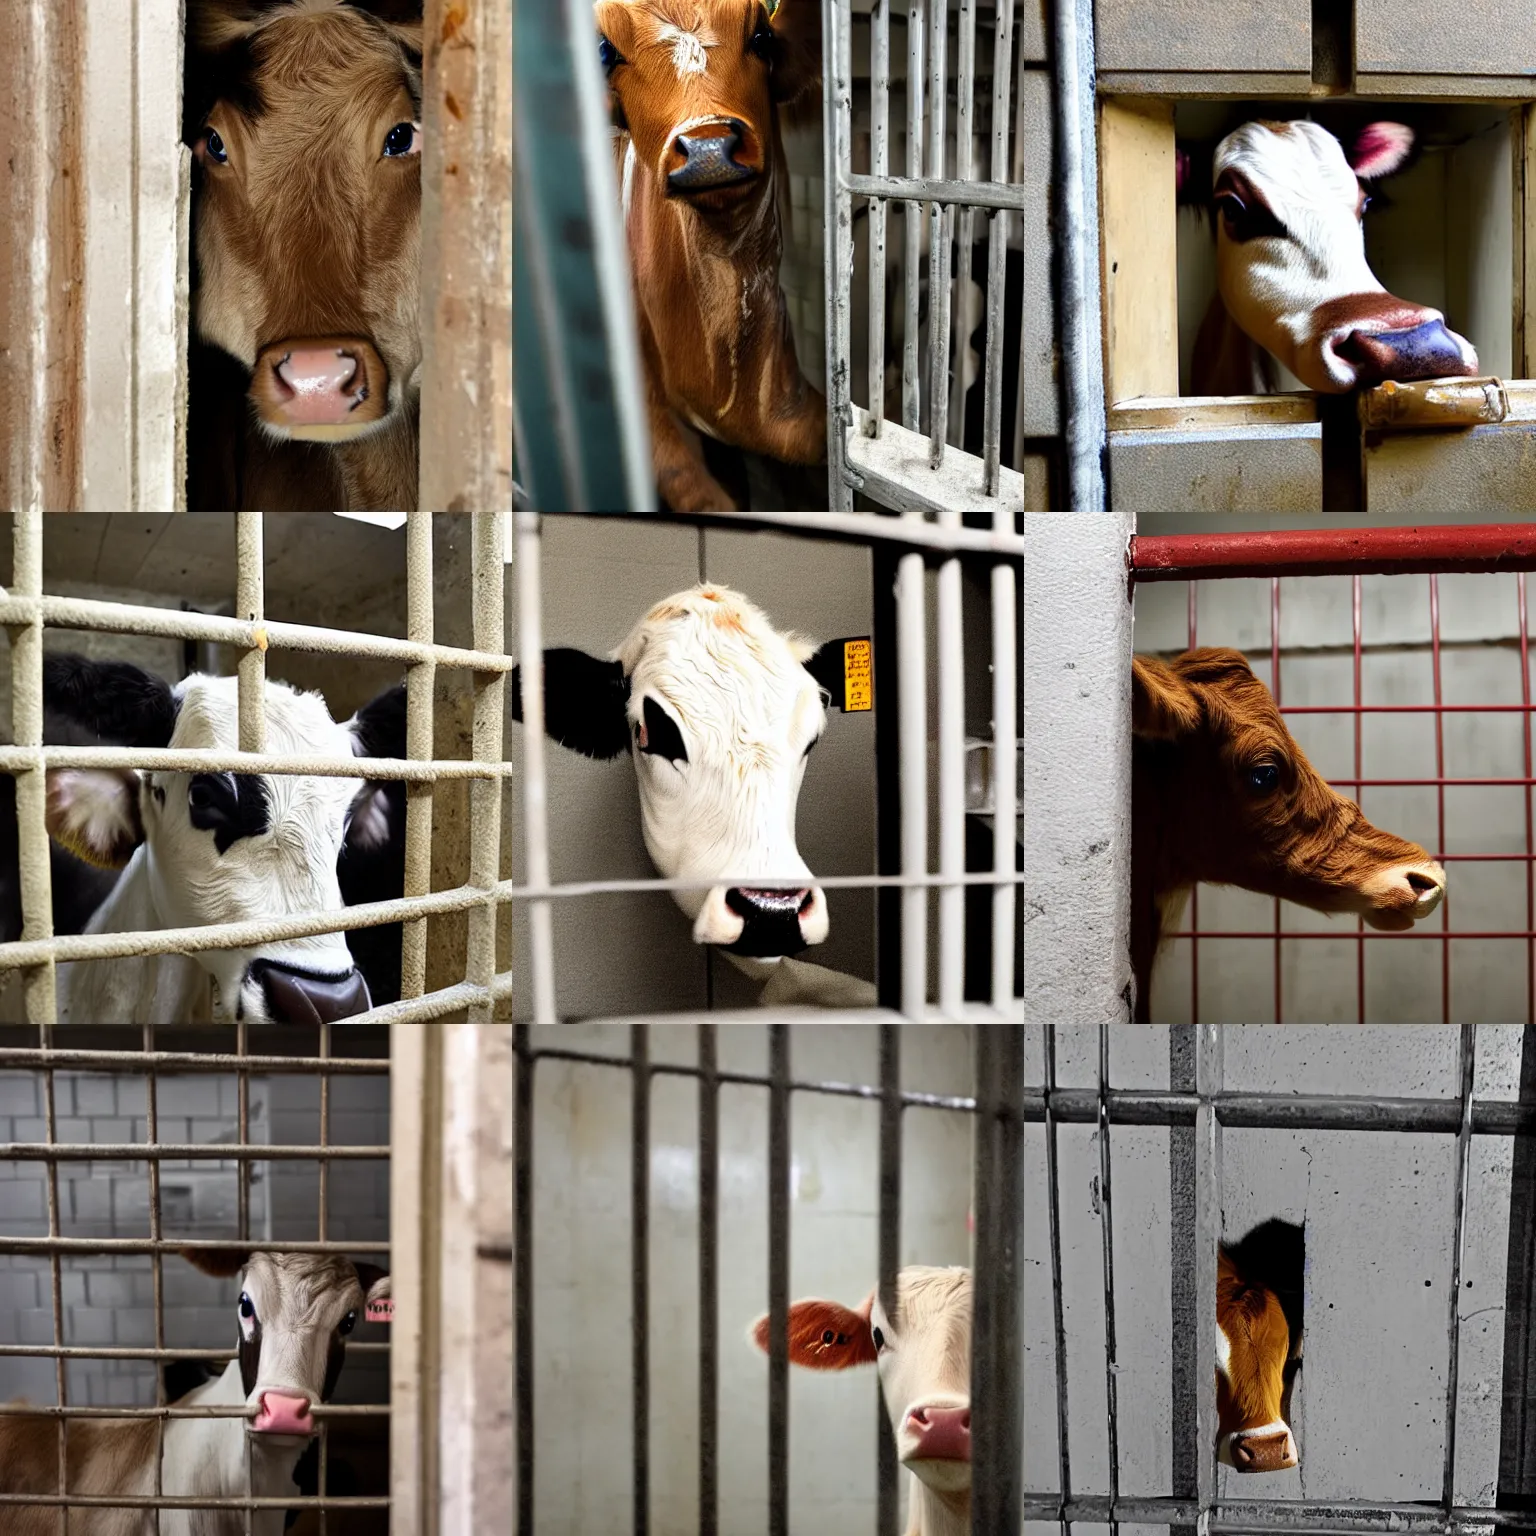 Prompt: calf inside a jailcell watching a bottle of milk